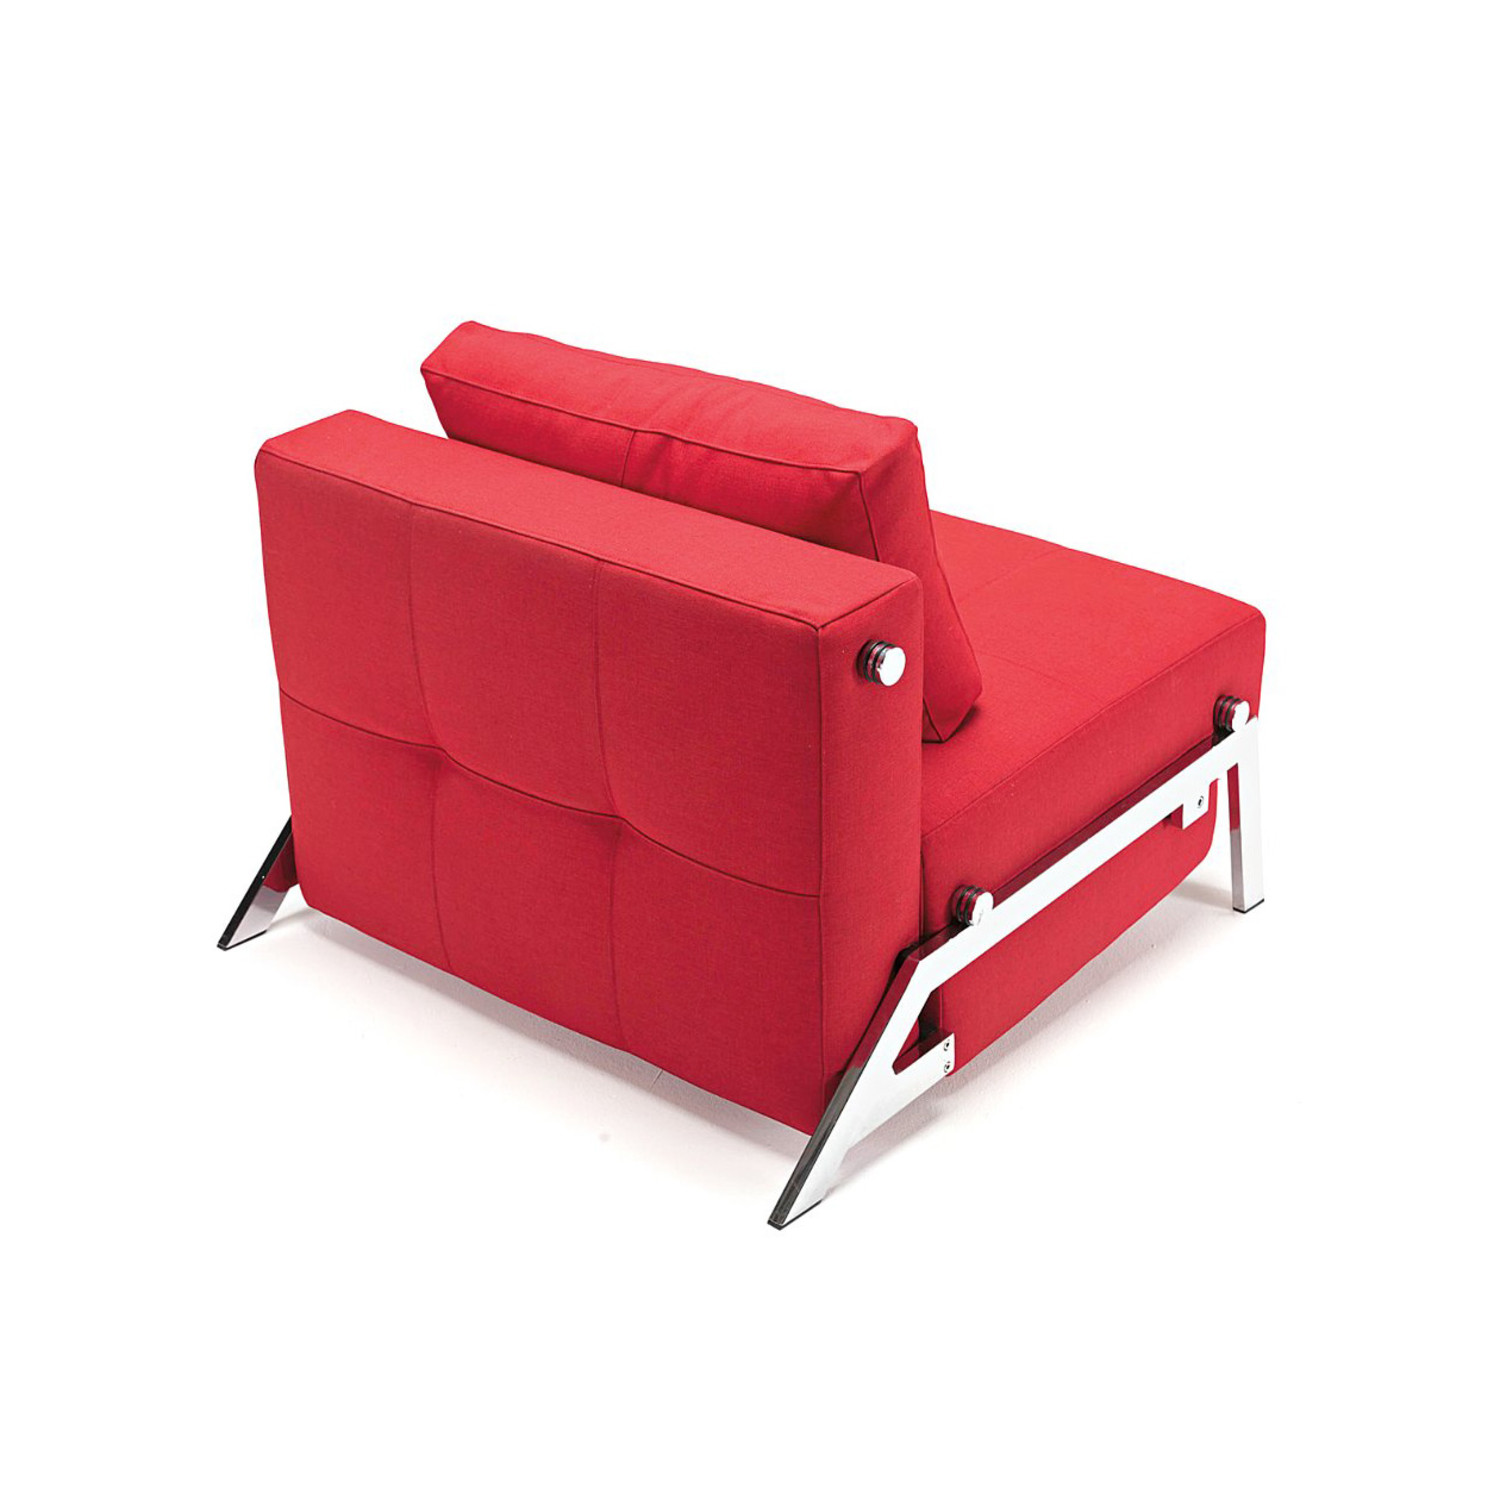  Cubed Sleek Chair by Per Weiss 